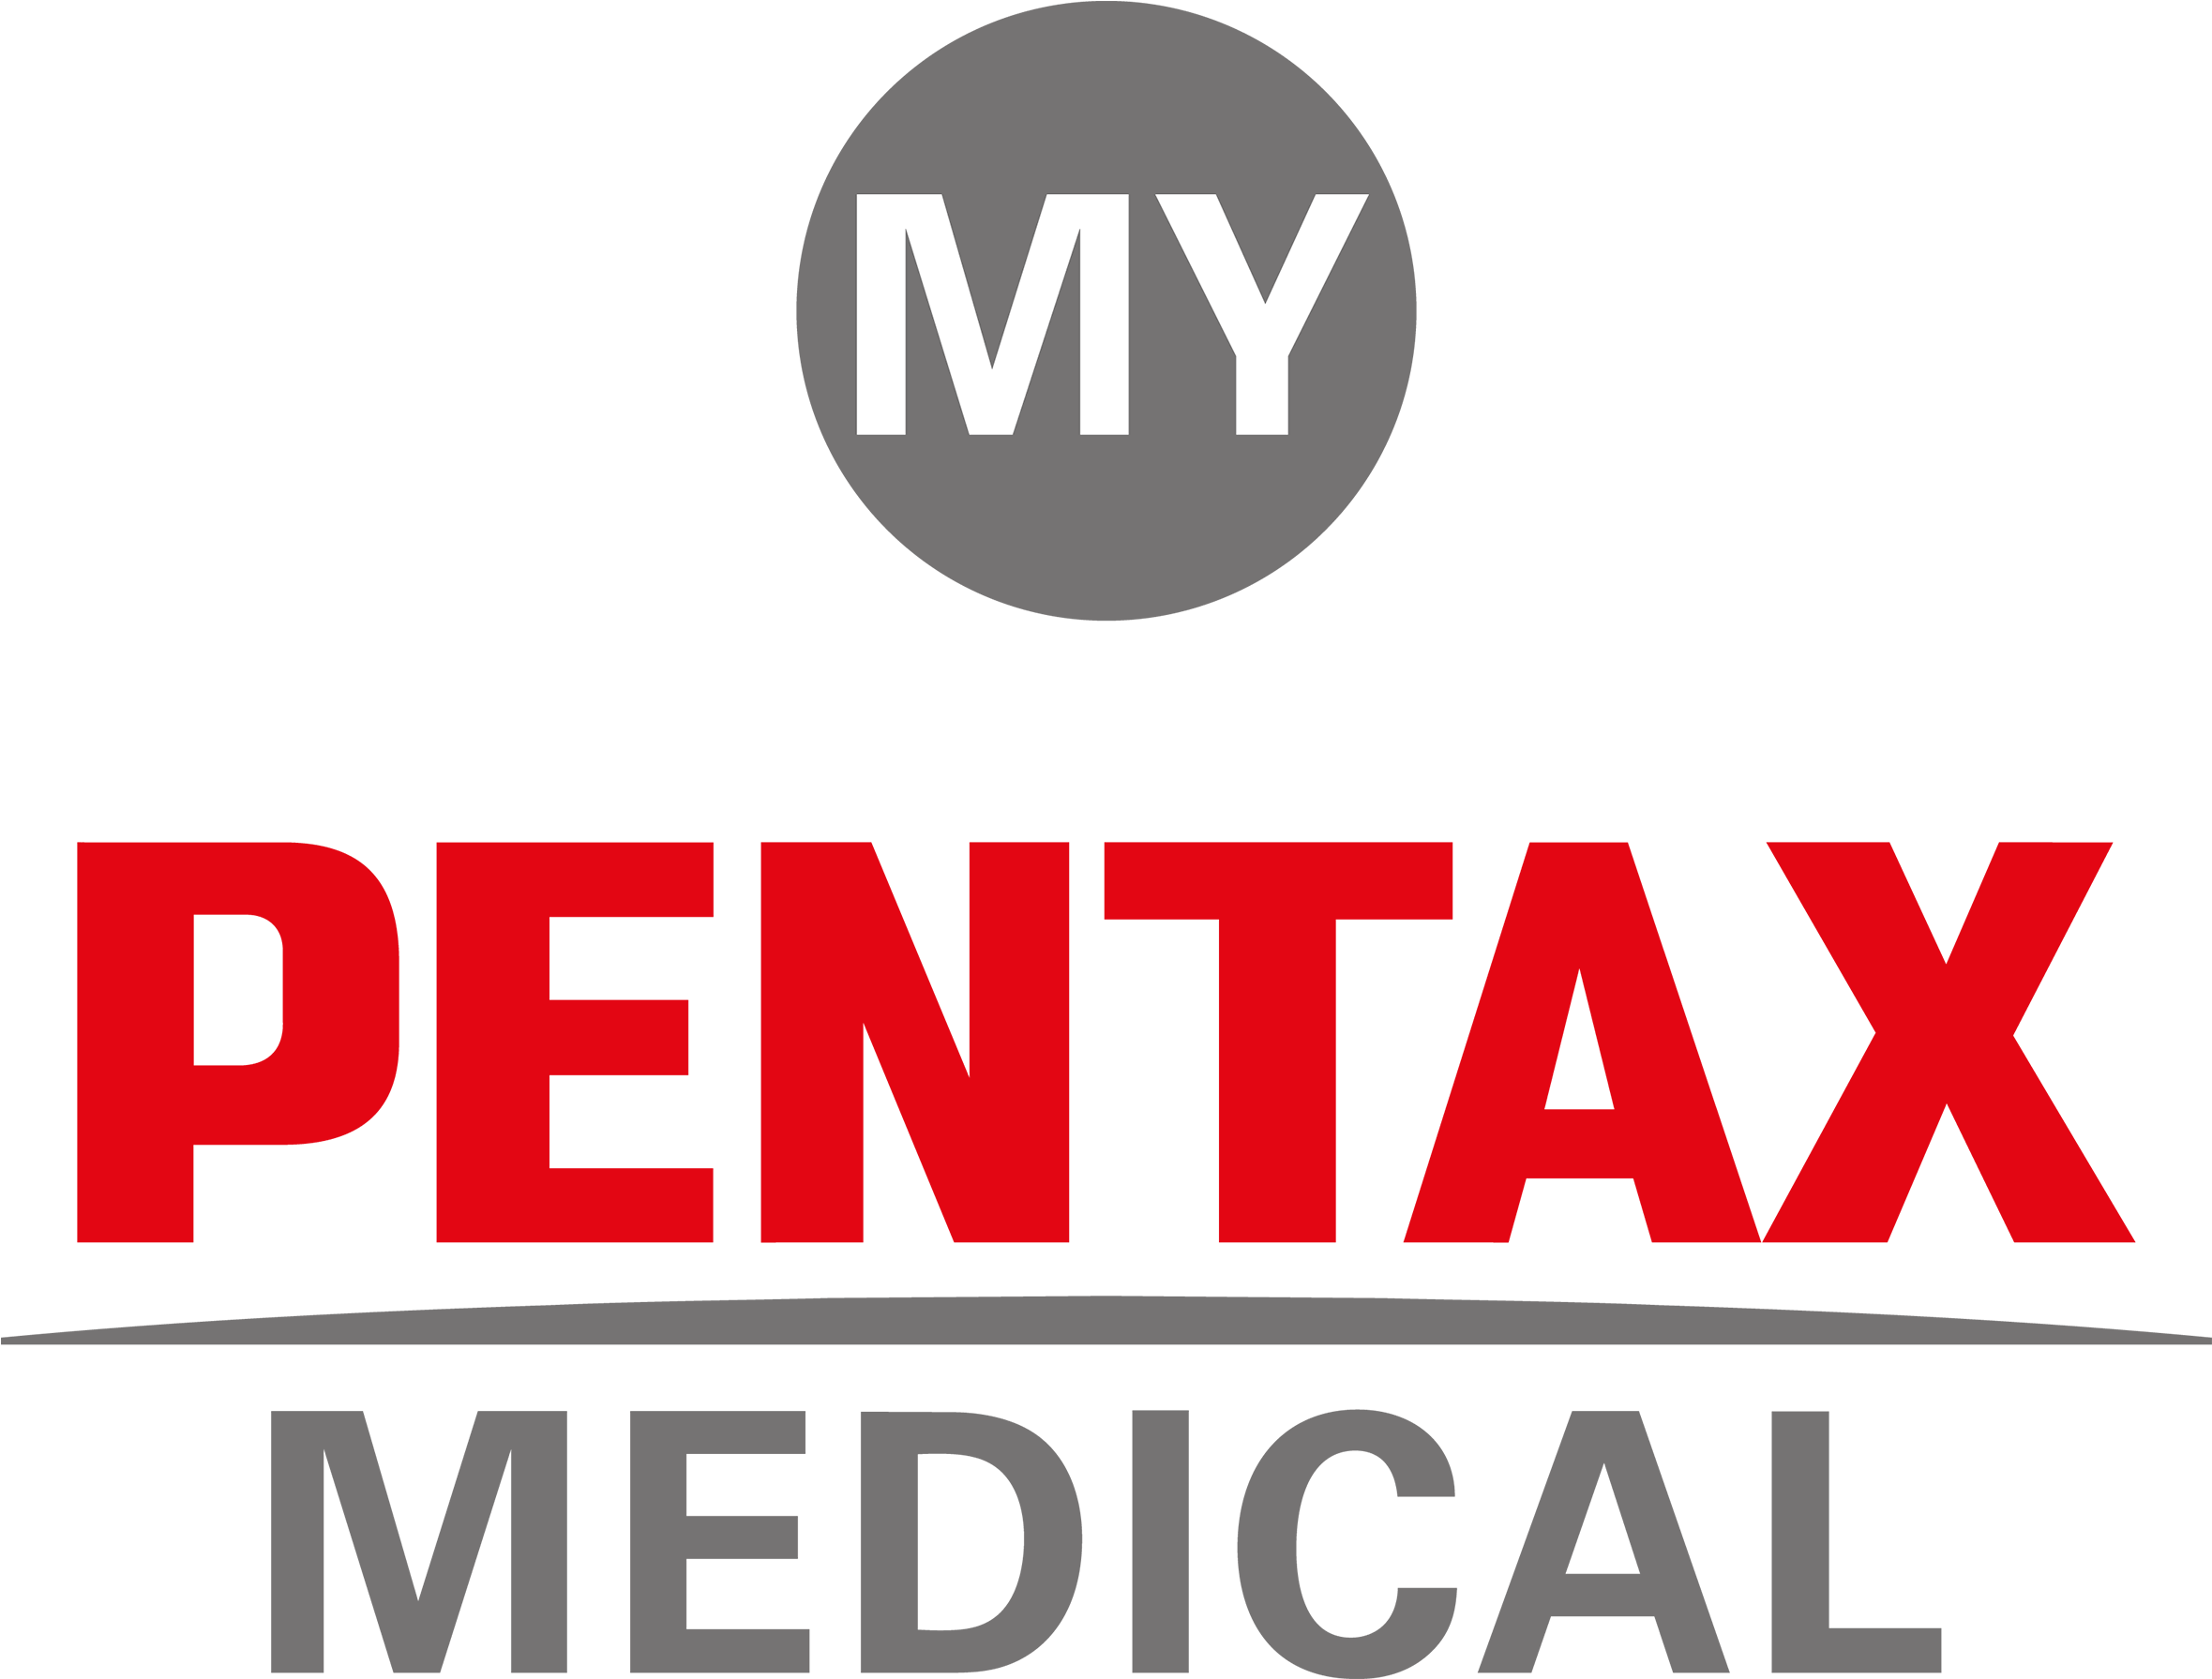 Pentax Medical (3144x2386)